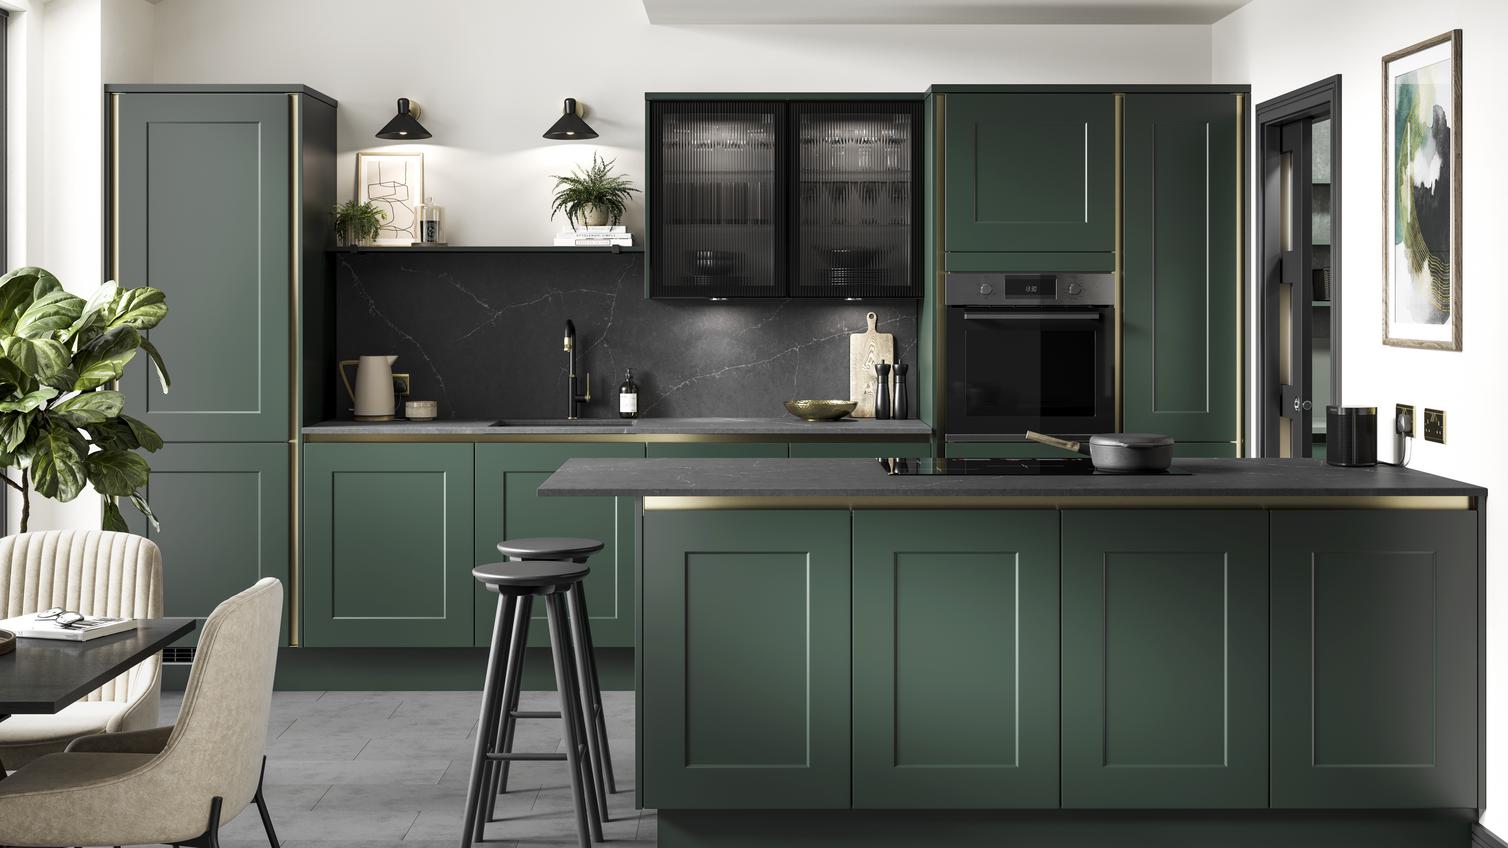 A fir green kitchen idea with handleless shaker cupboard doors in a peninsula layout. Has black worktops and brass profiles